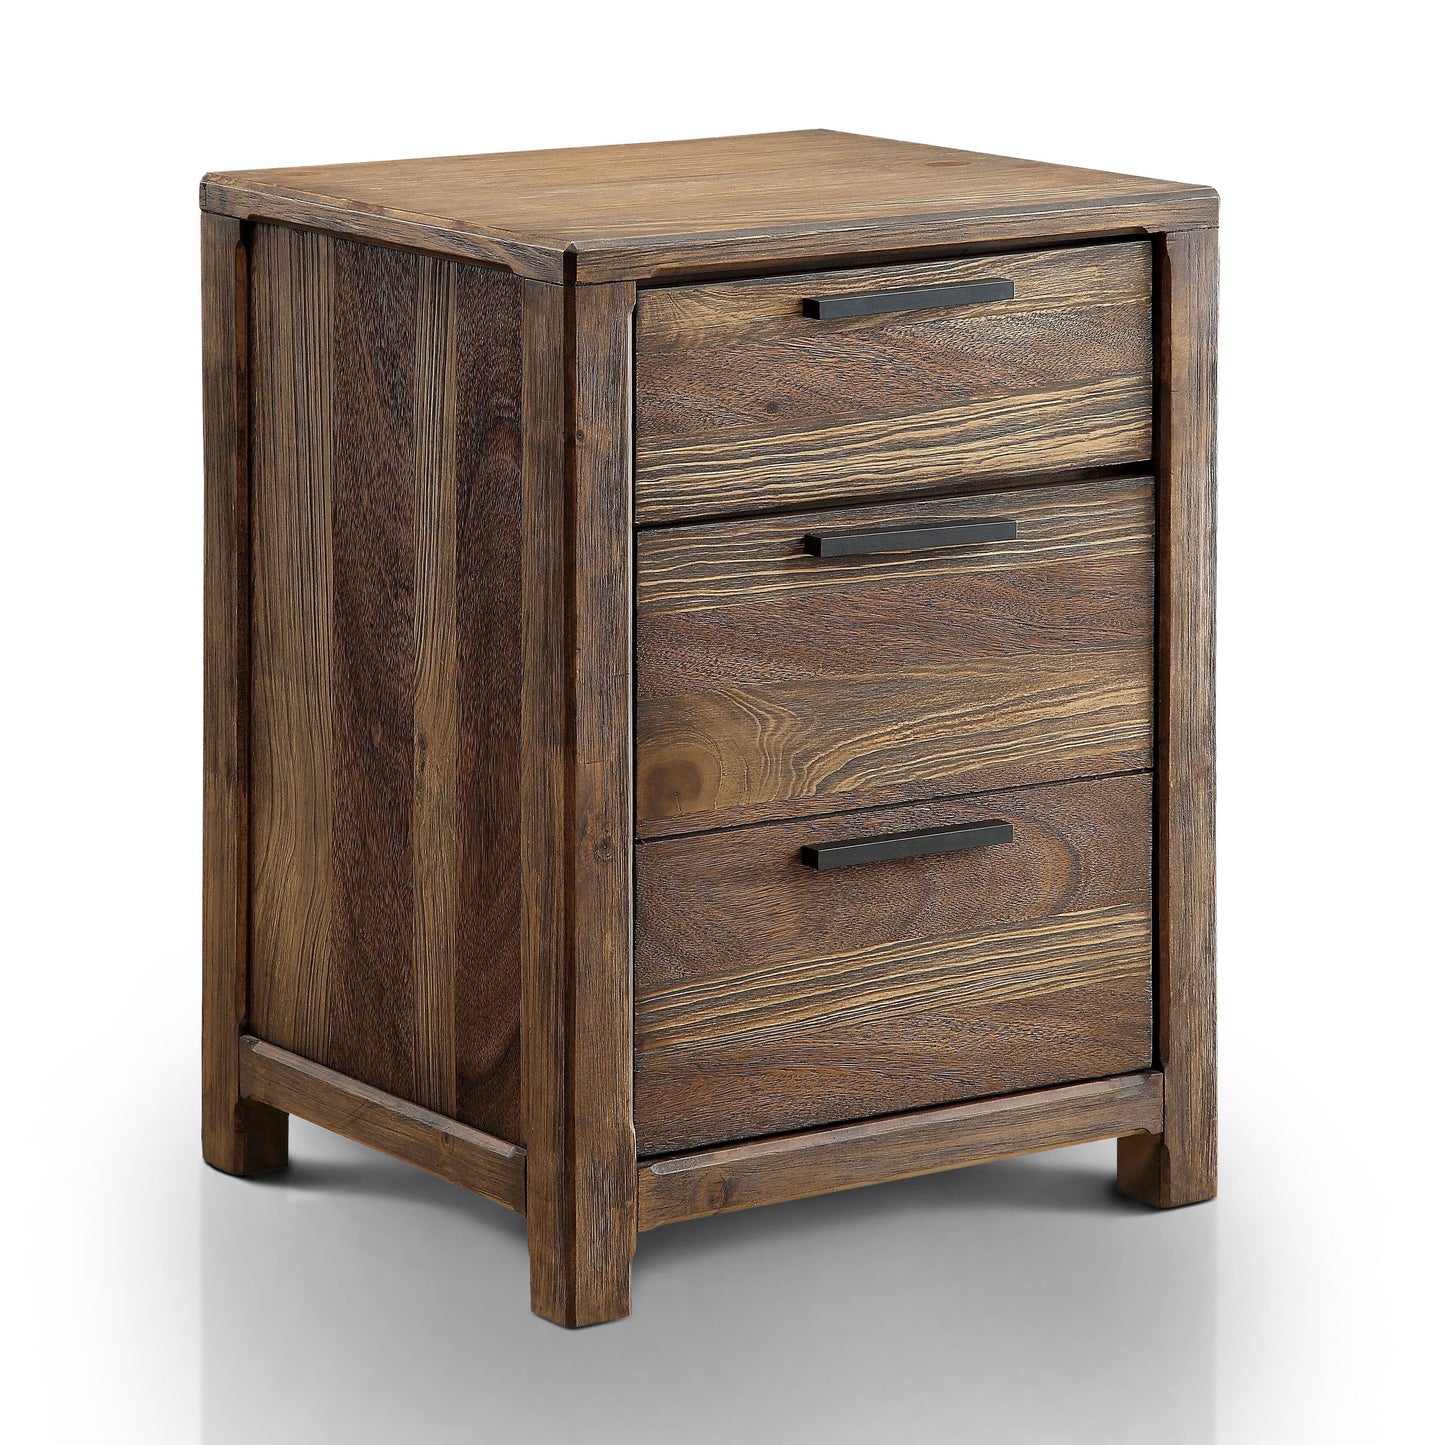 Furniture of America Nightstand Morris Rustic Style Natural Tone, 2-Drawer Nightstand